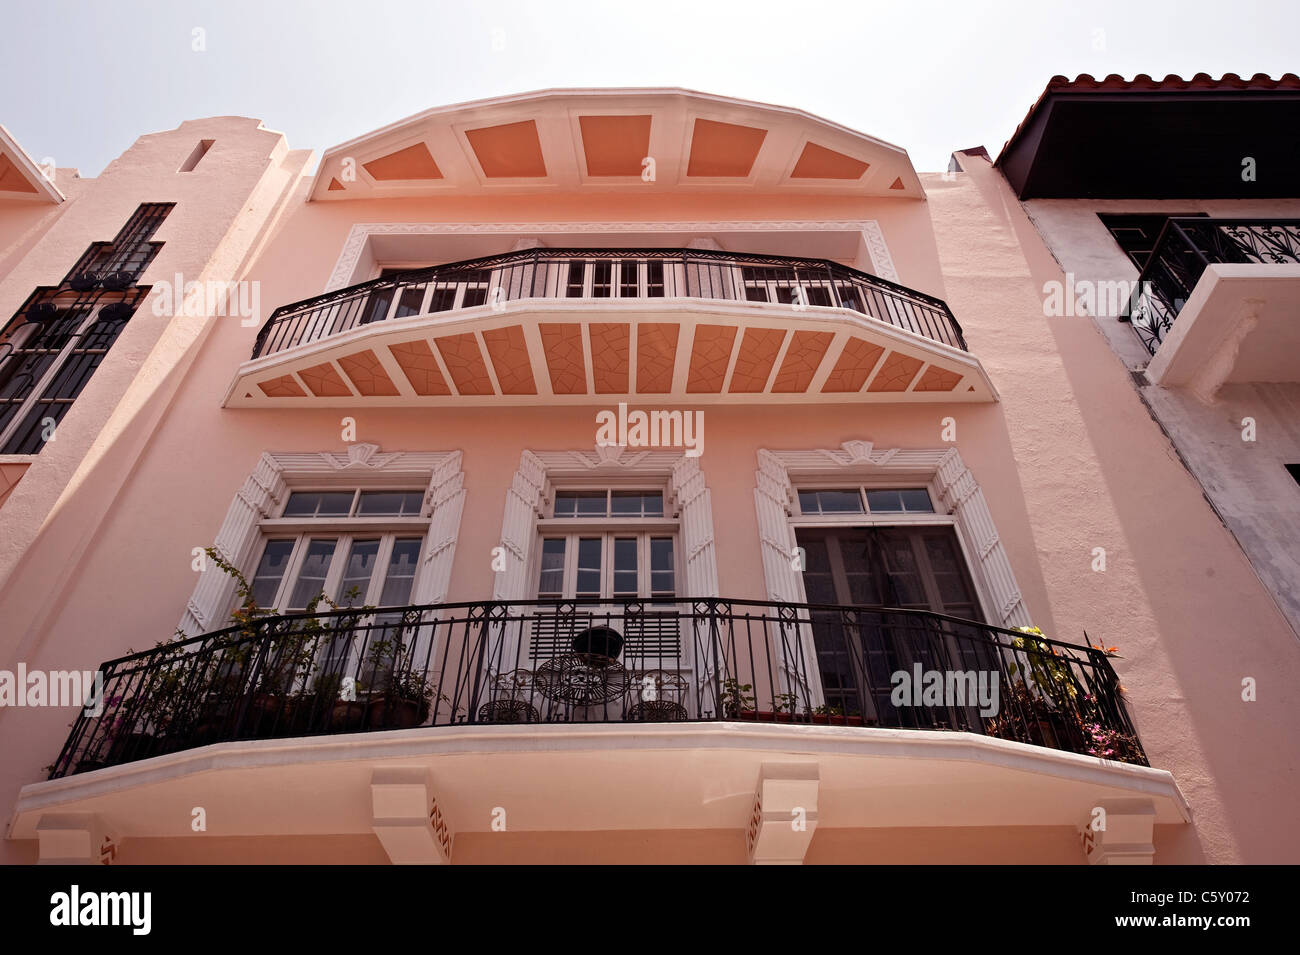 Panama-Stadt Casco Viejo alten Häusern im Kolonialstil Stockfoto